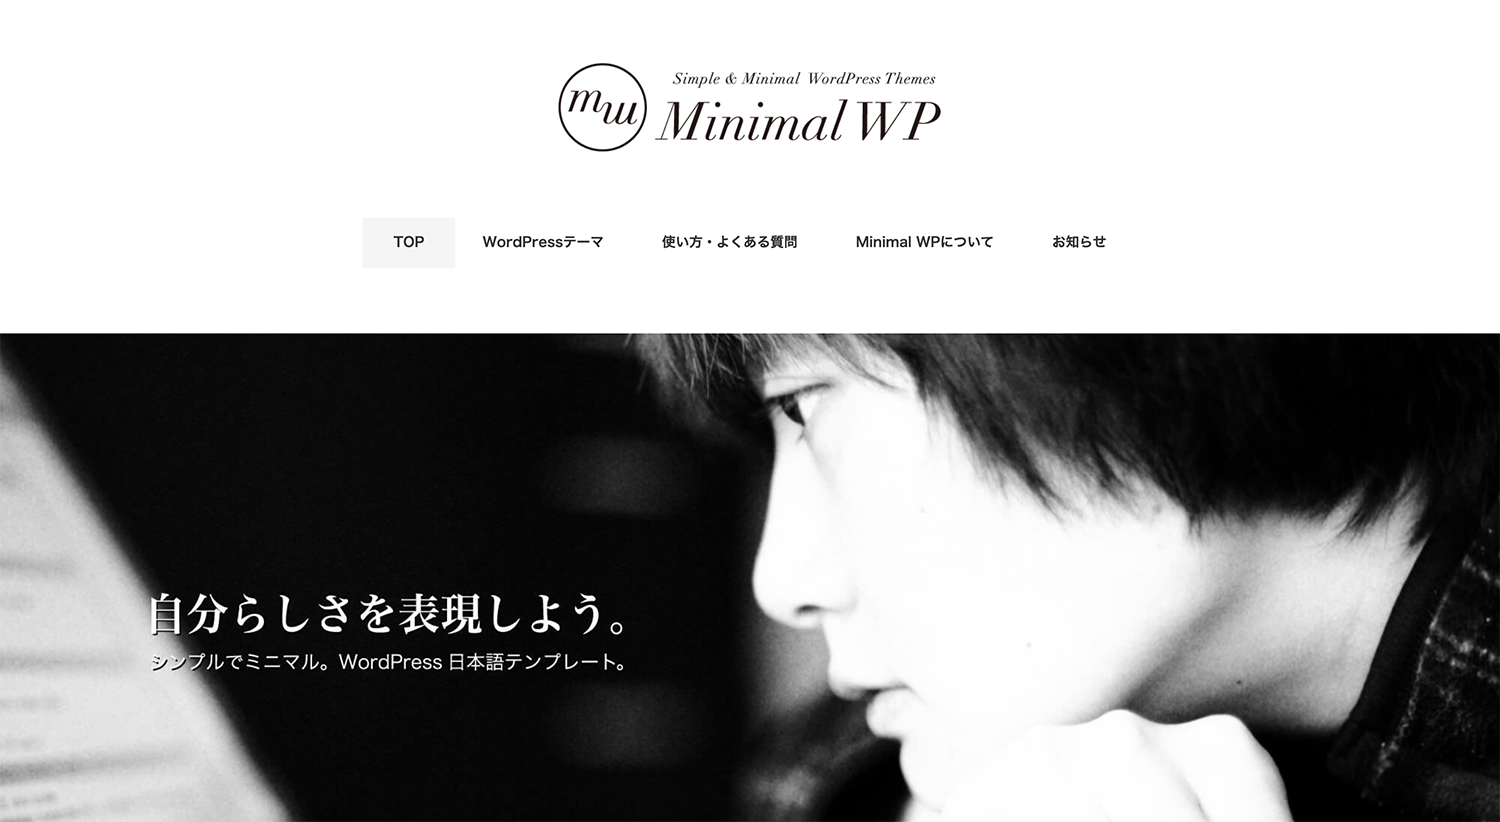 Minimal WP公式サイトのトップページ画像